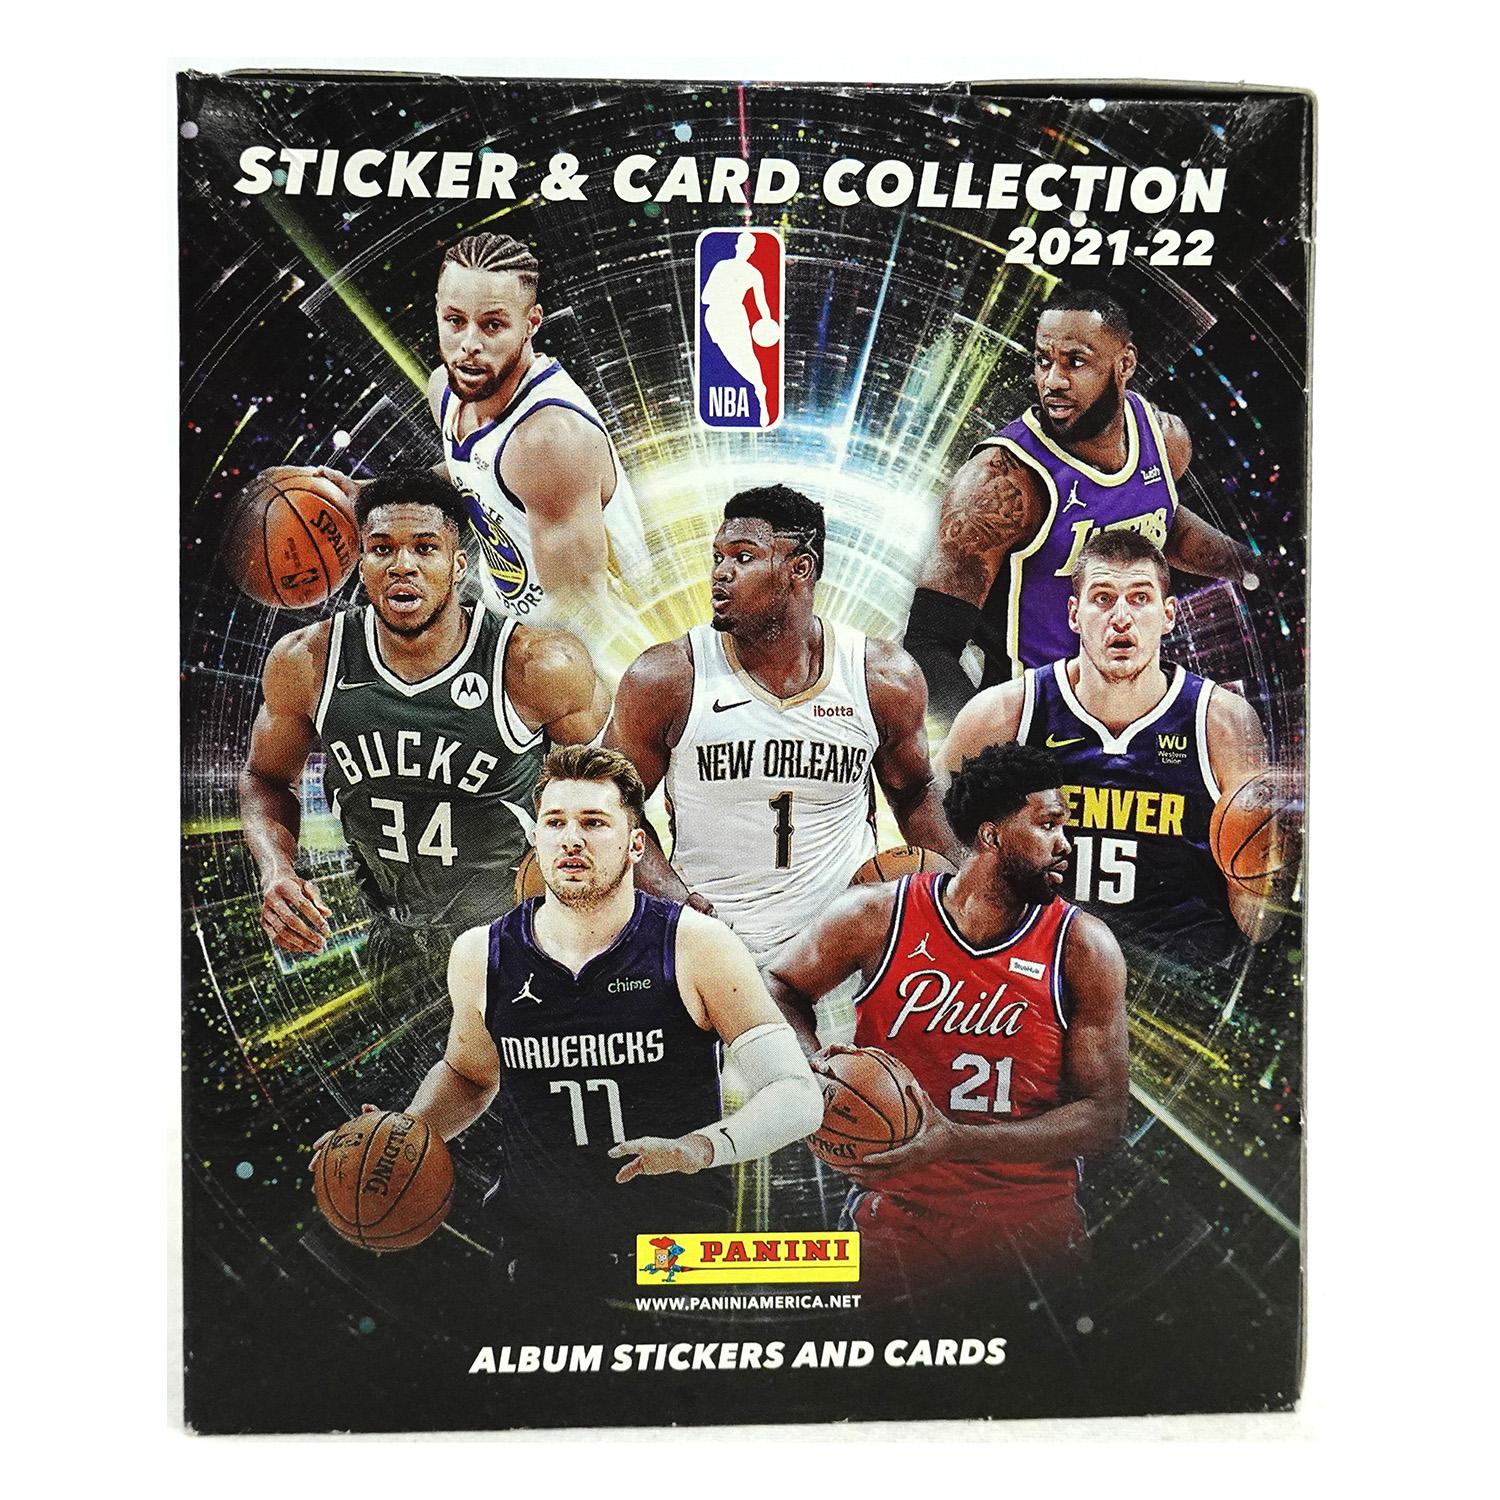 NBA Basketball Trading Cards. Collection of NBA Basketball Card